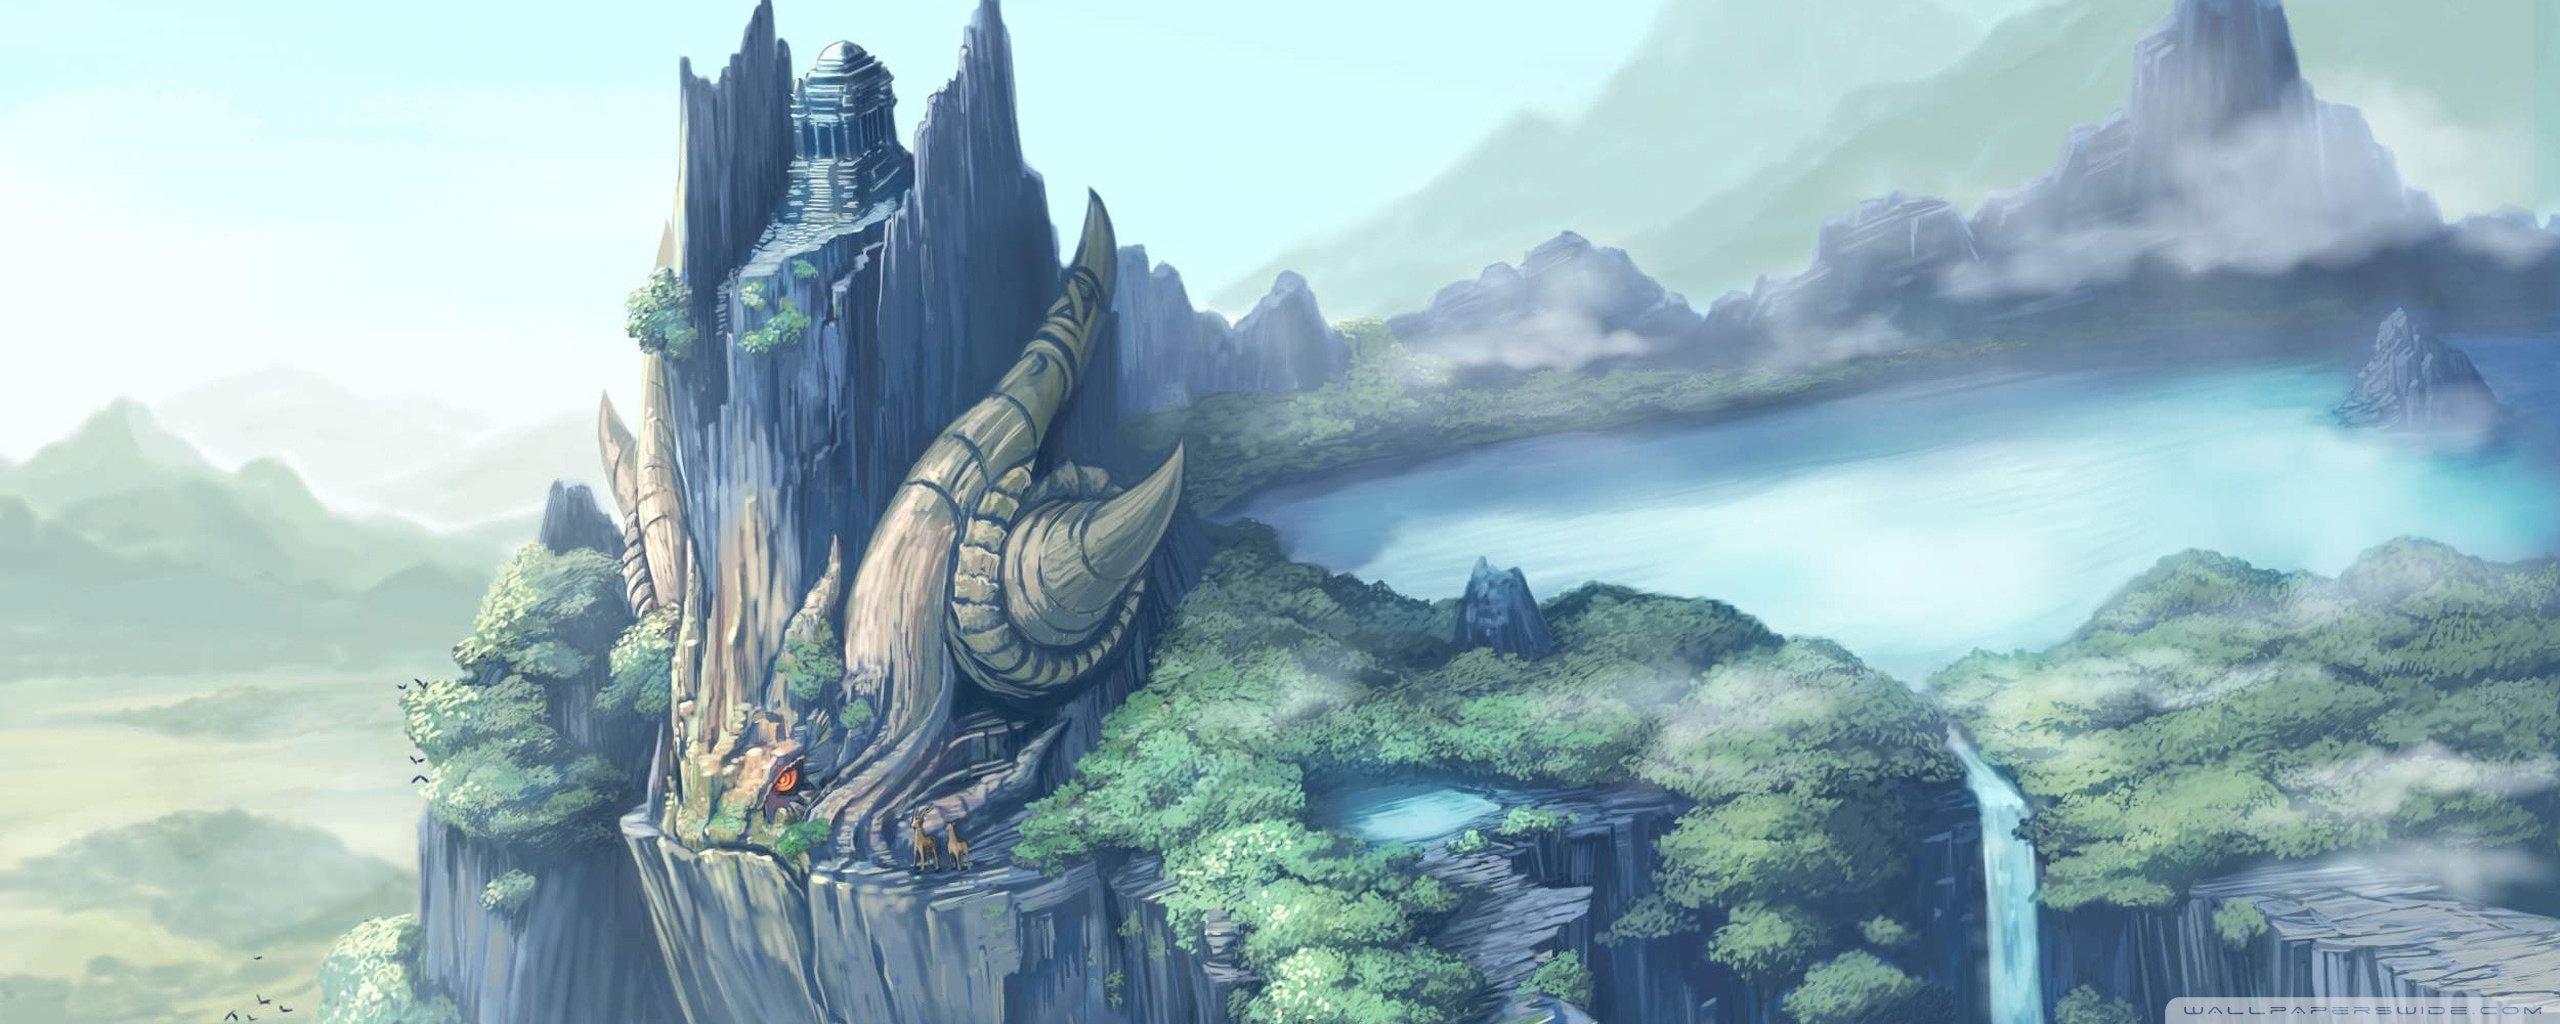 dragon castle fantasy art ❤ 4k hd desktop wallpaper for • dual